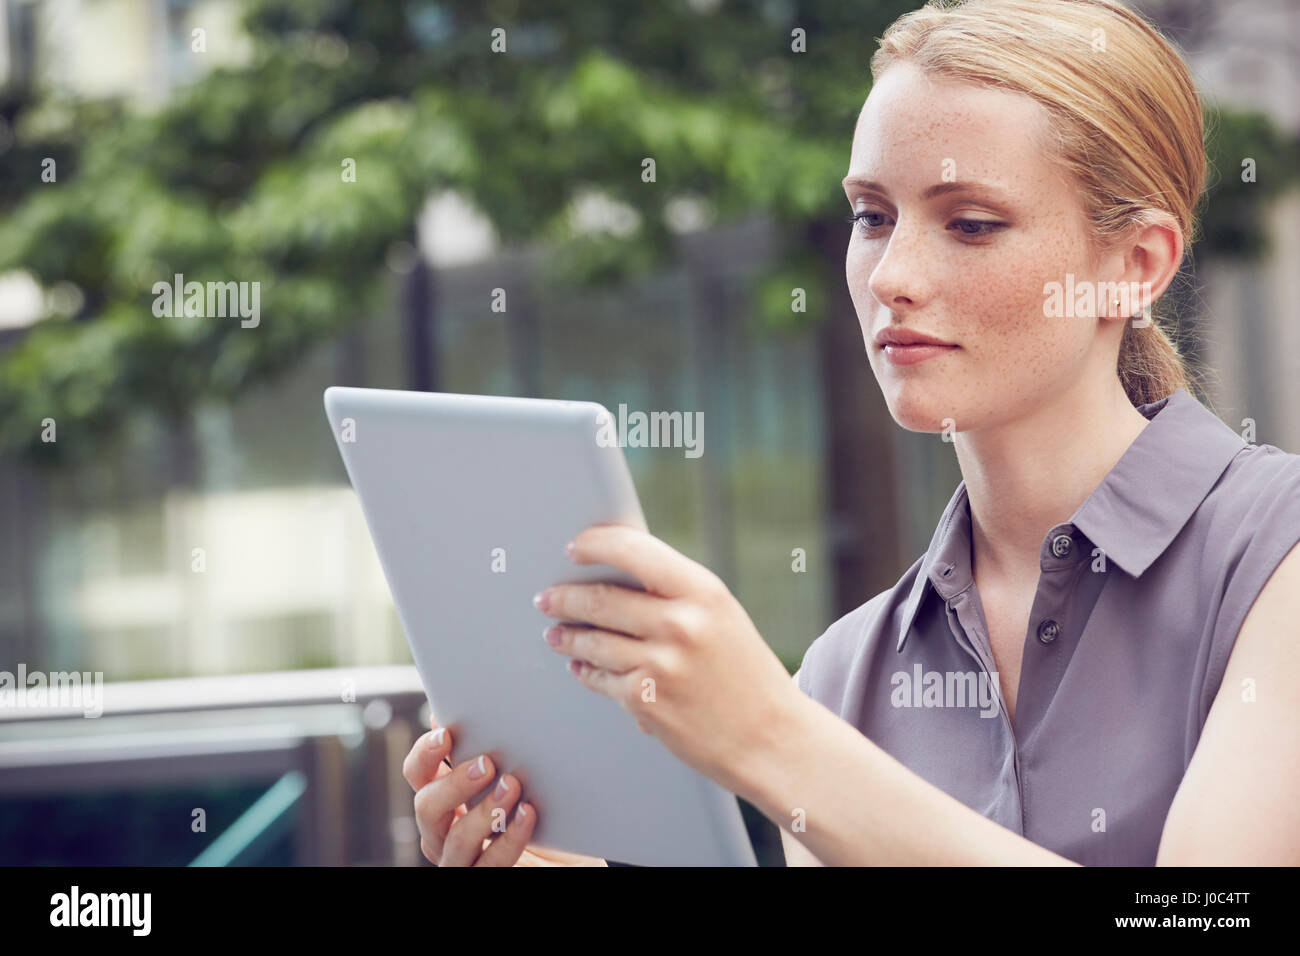 Woman using digital tablet, London, UK Stock Photo